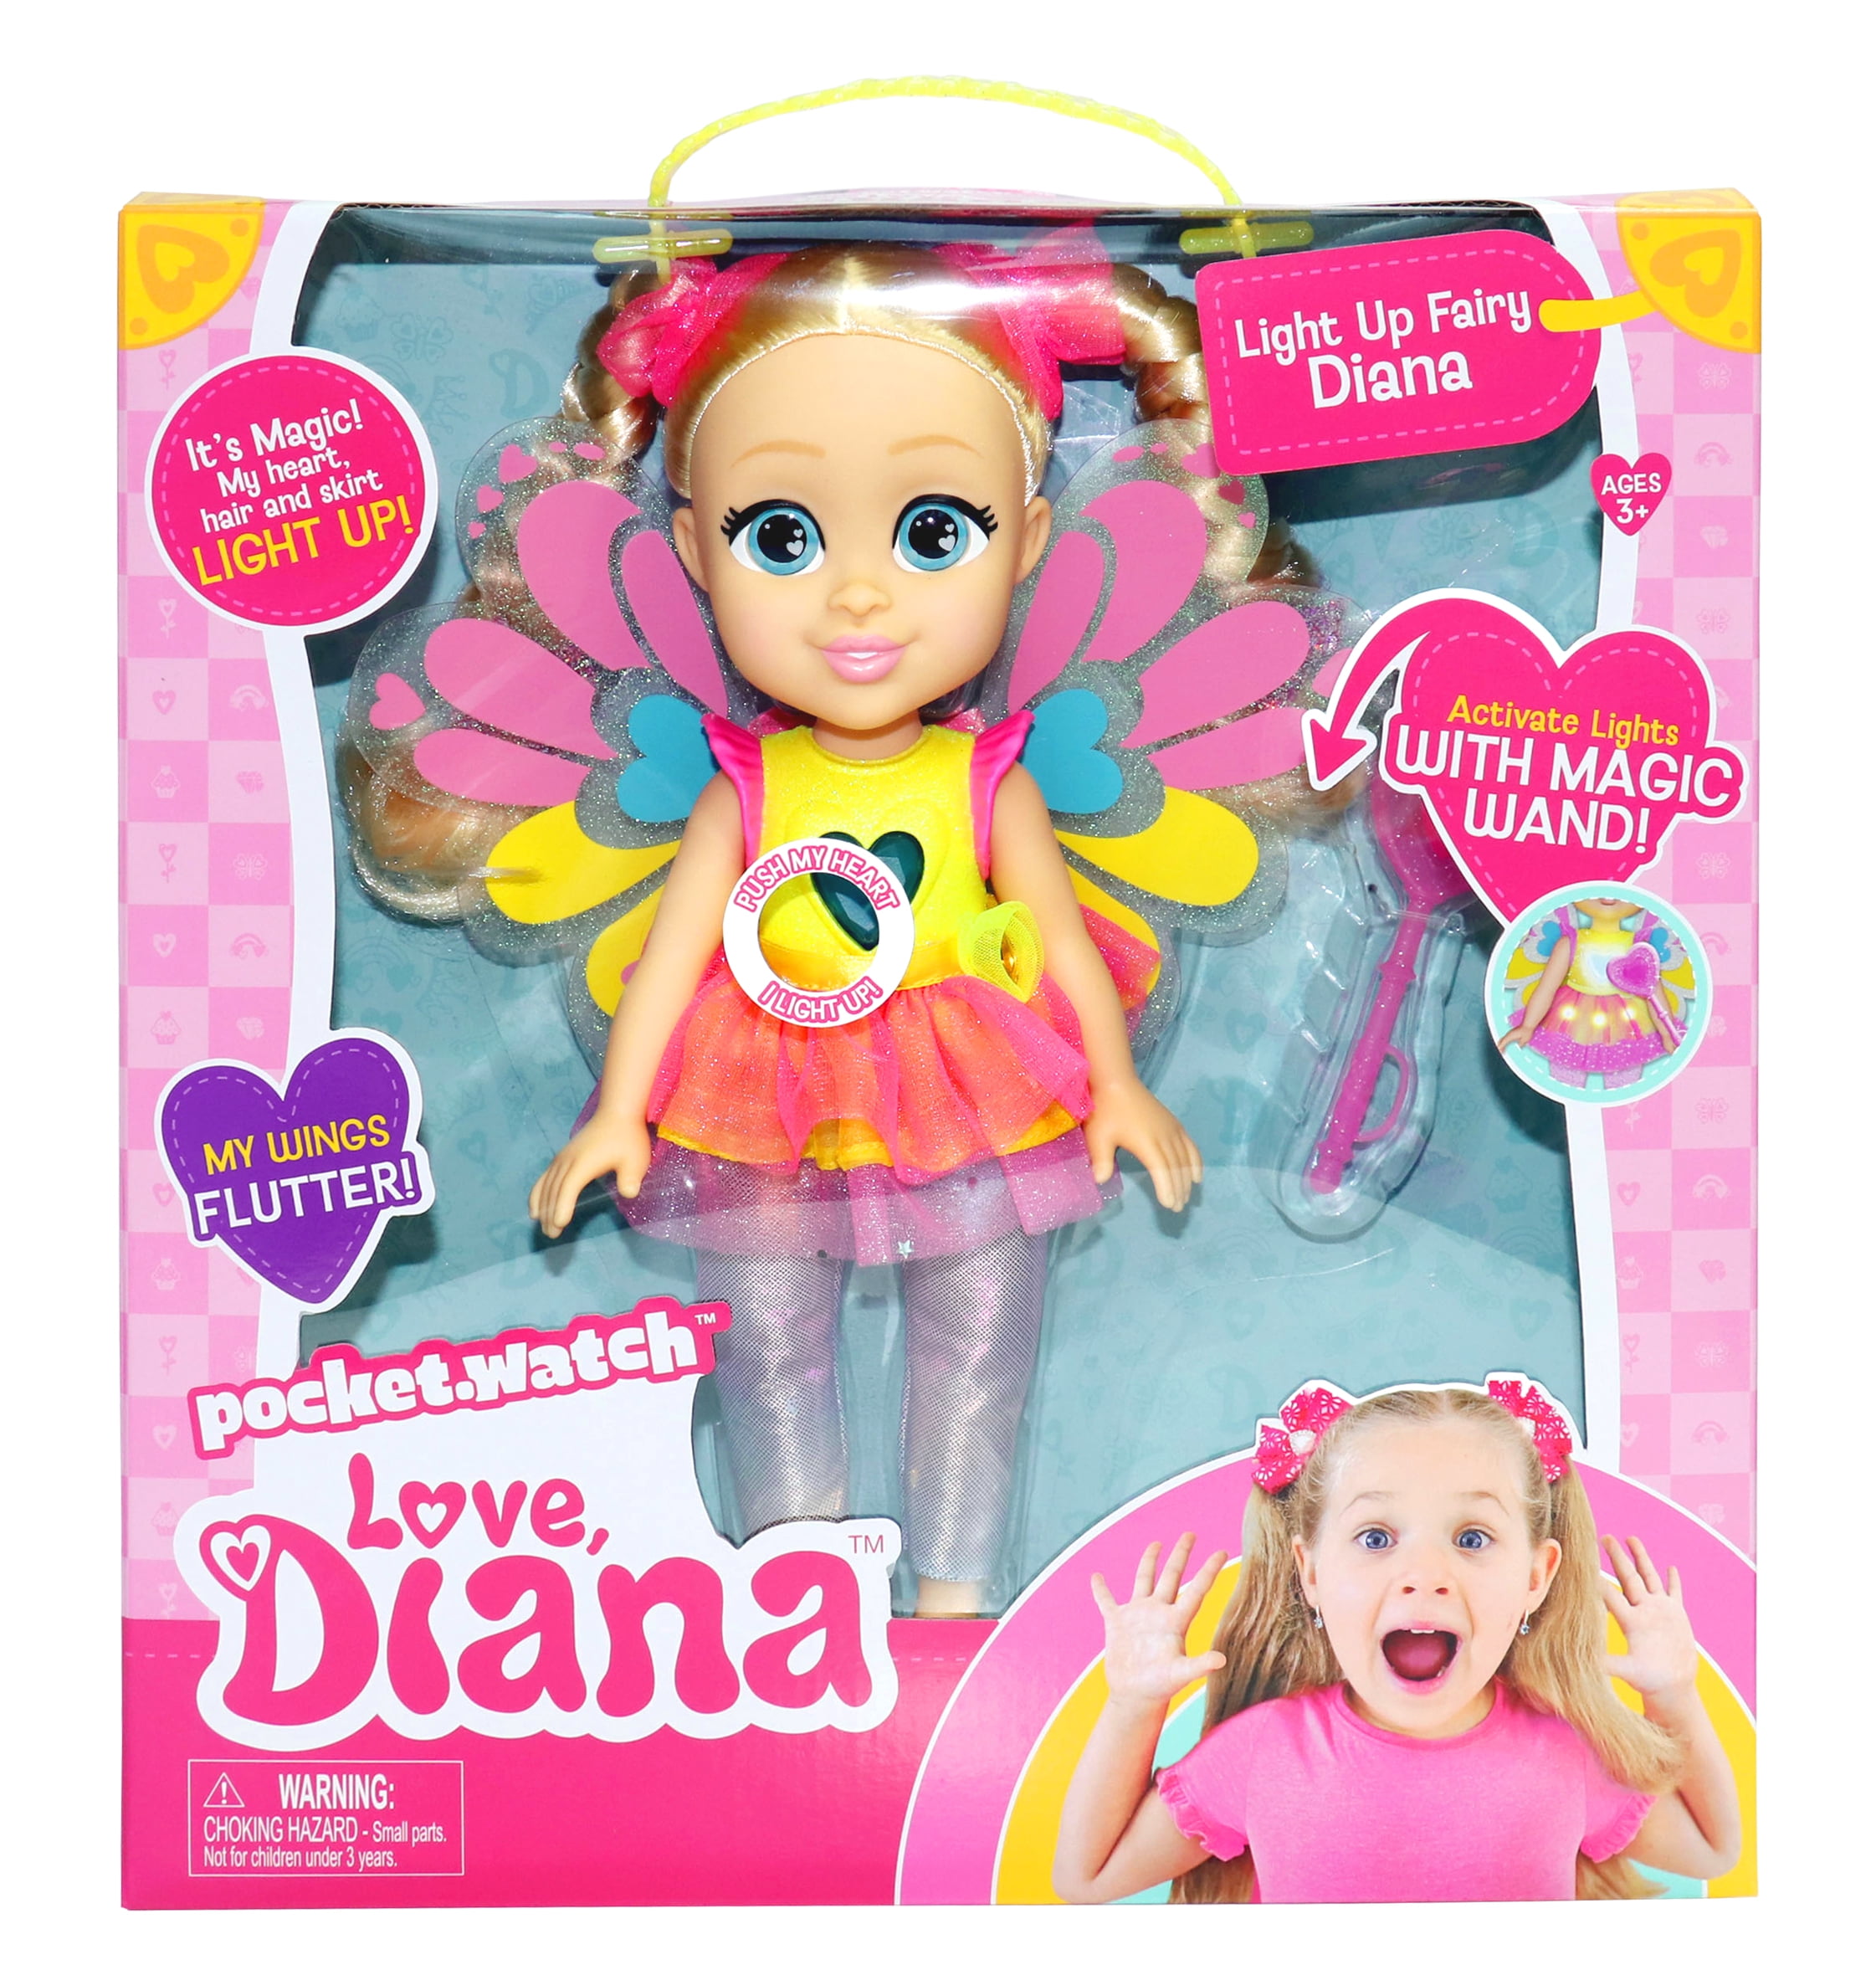 Love, Diana Light up Fairy Doll, 13 inch Doll - Walmart.com